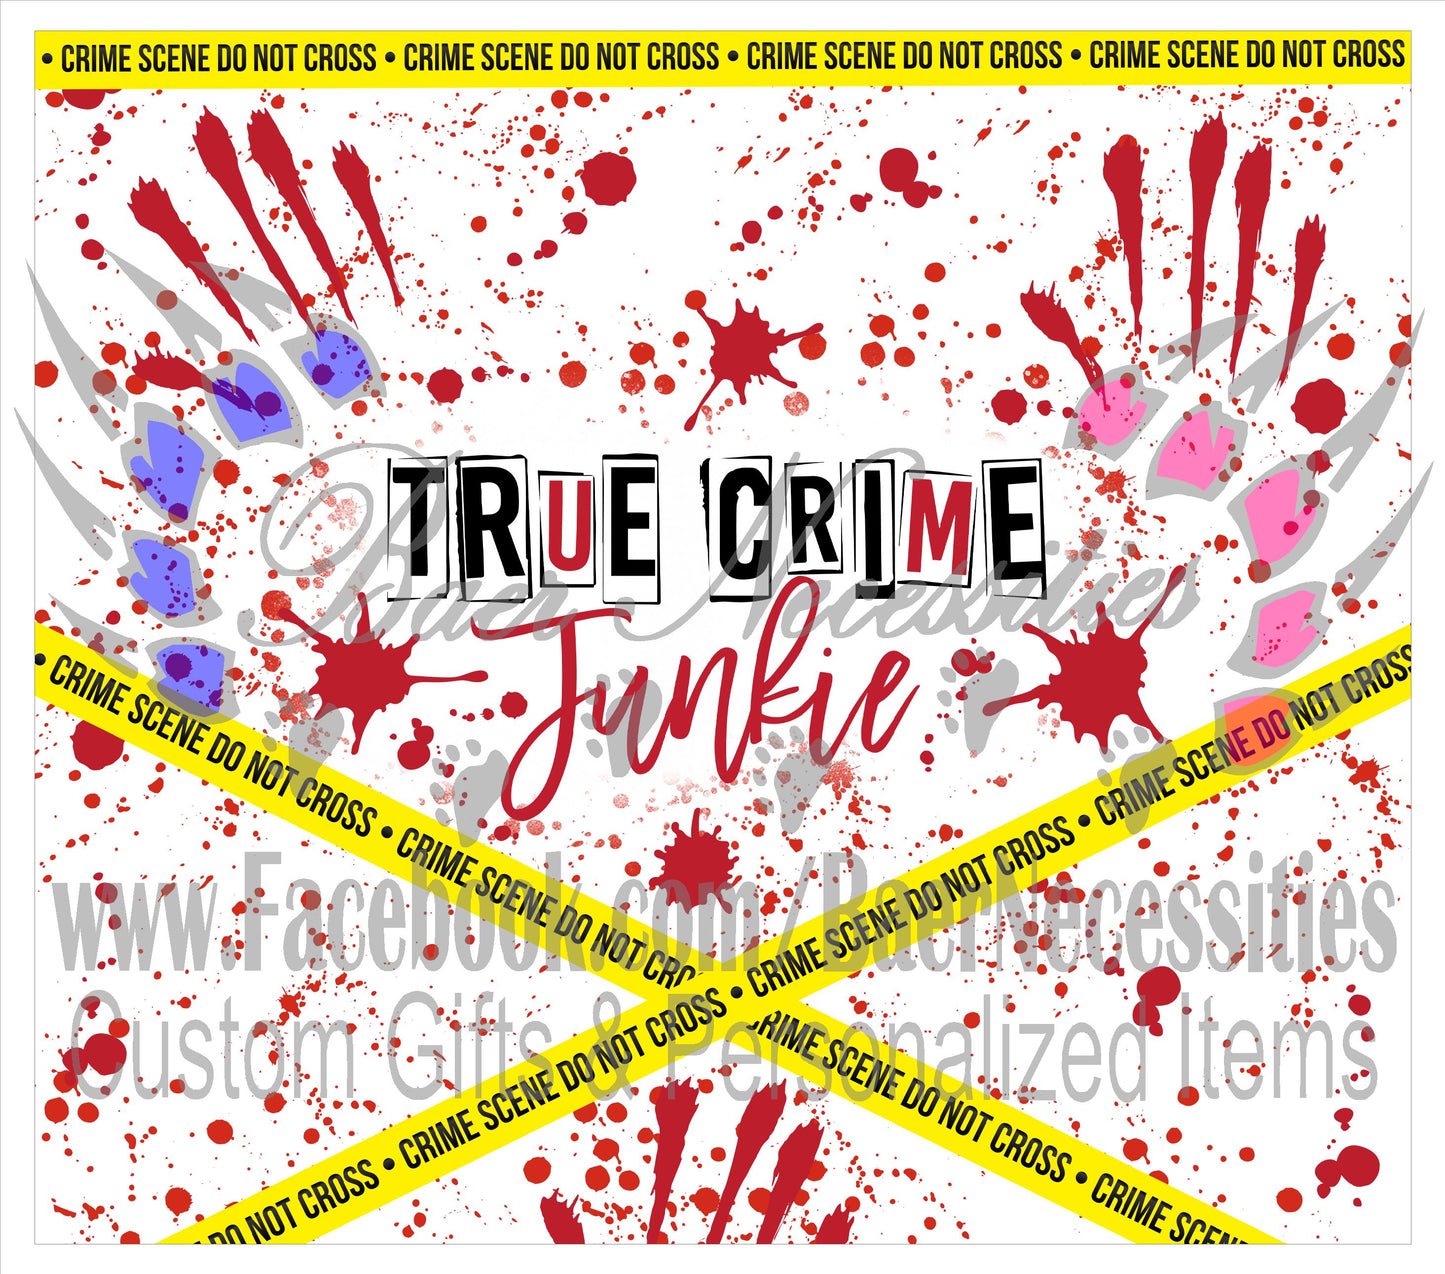 True Crime Junkie - Tumbler Transfer